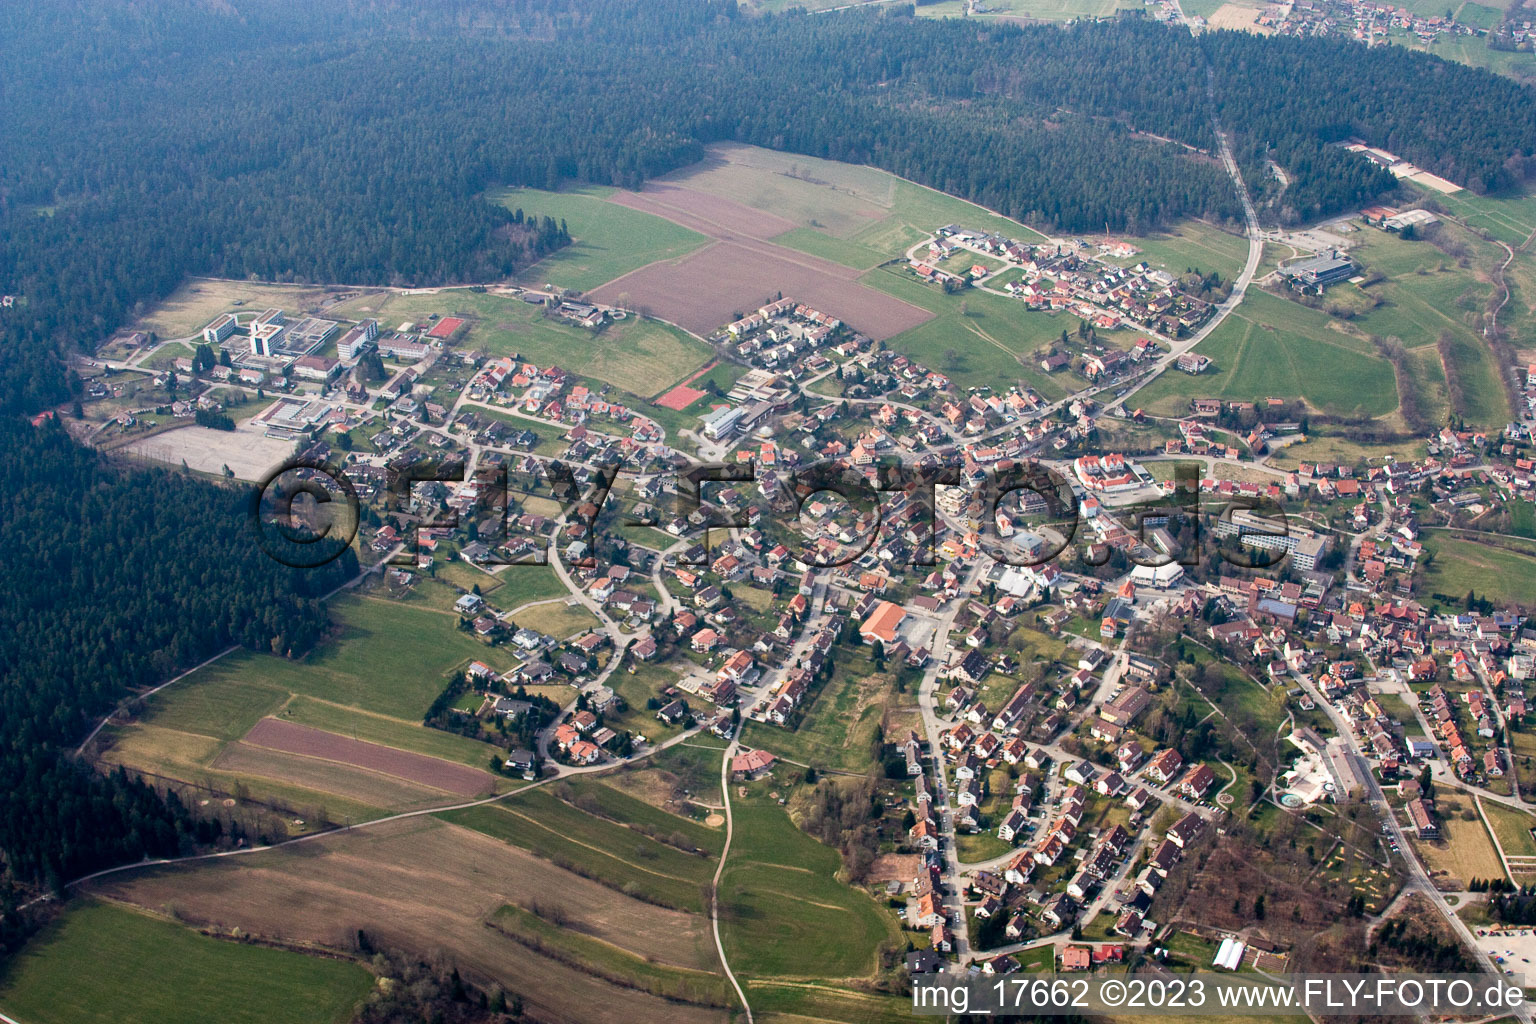 Schömberg dans le département Bade-Wurtemberg, Allemagne d'en haut